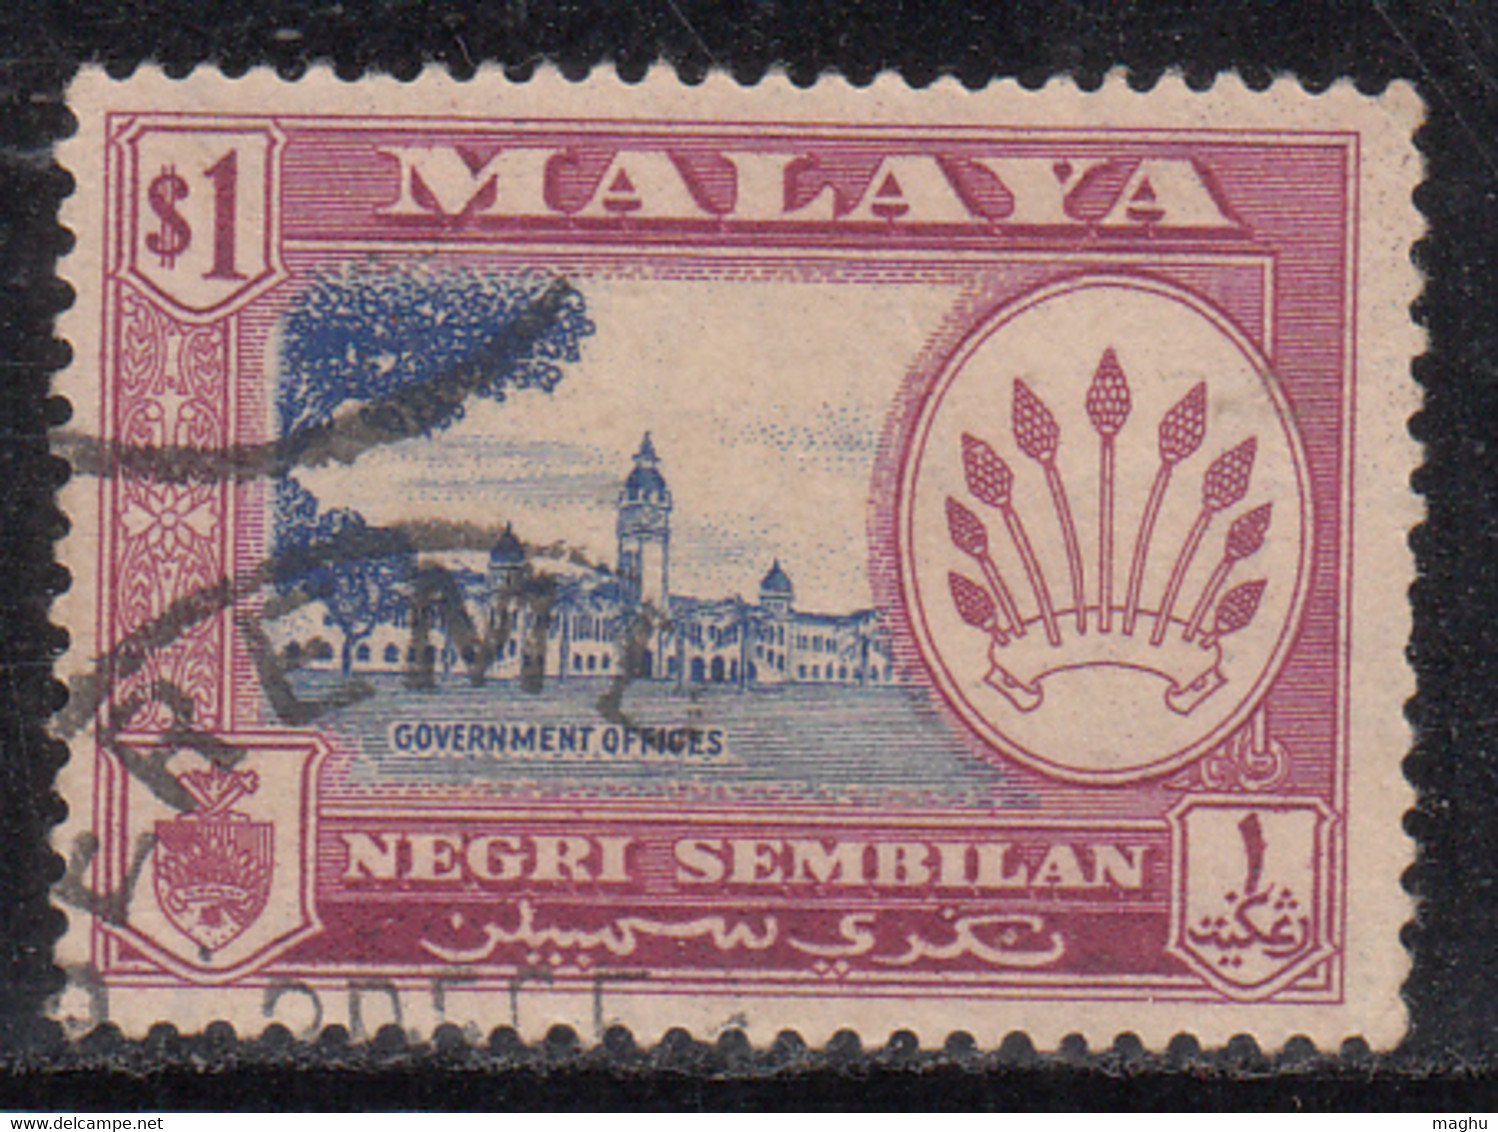 $1 Used Negri Sembilen,  Malaya, Malaysia Used 1957 - Negri Sembilan